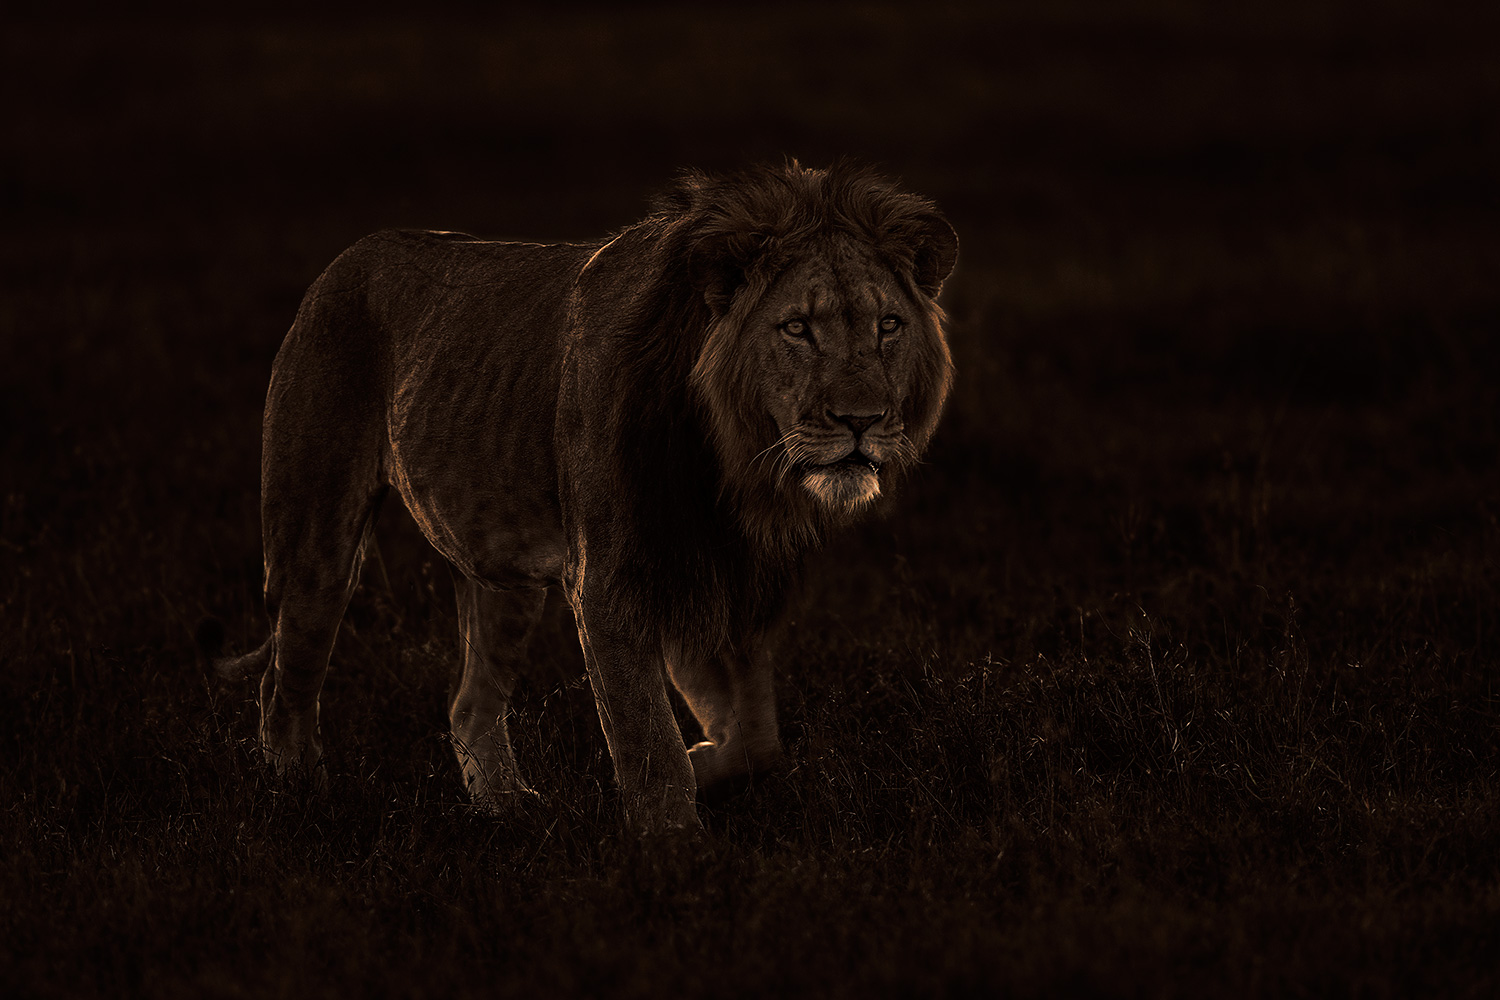 lion at dusk, toned